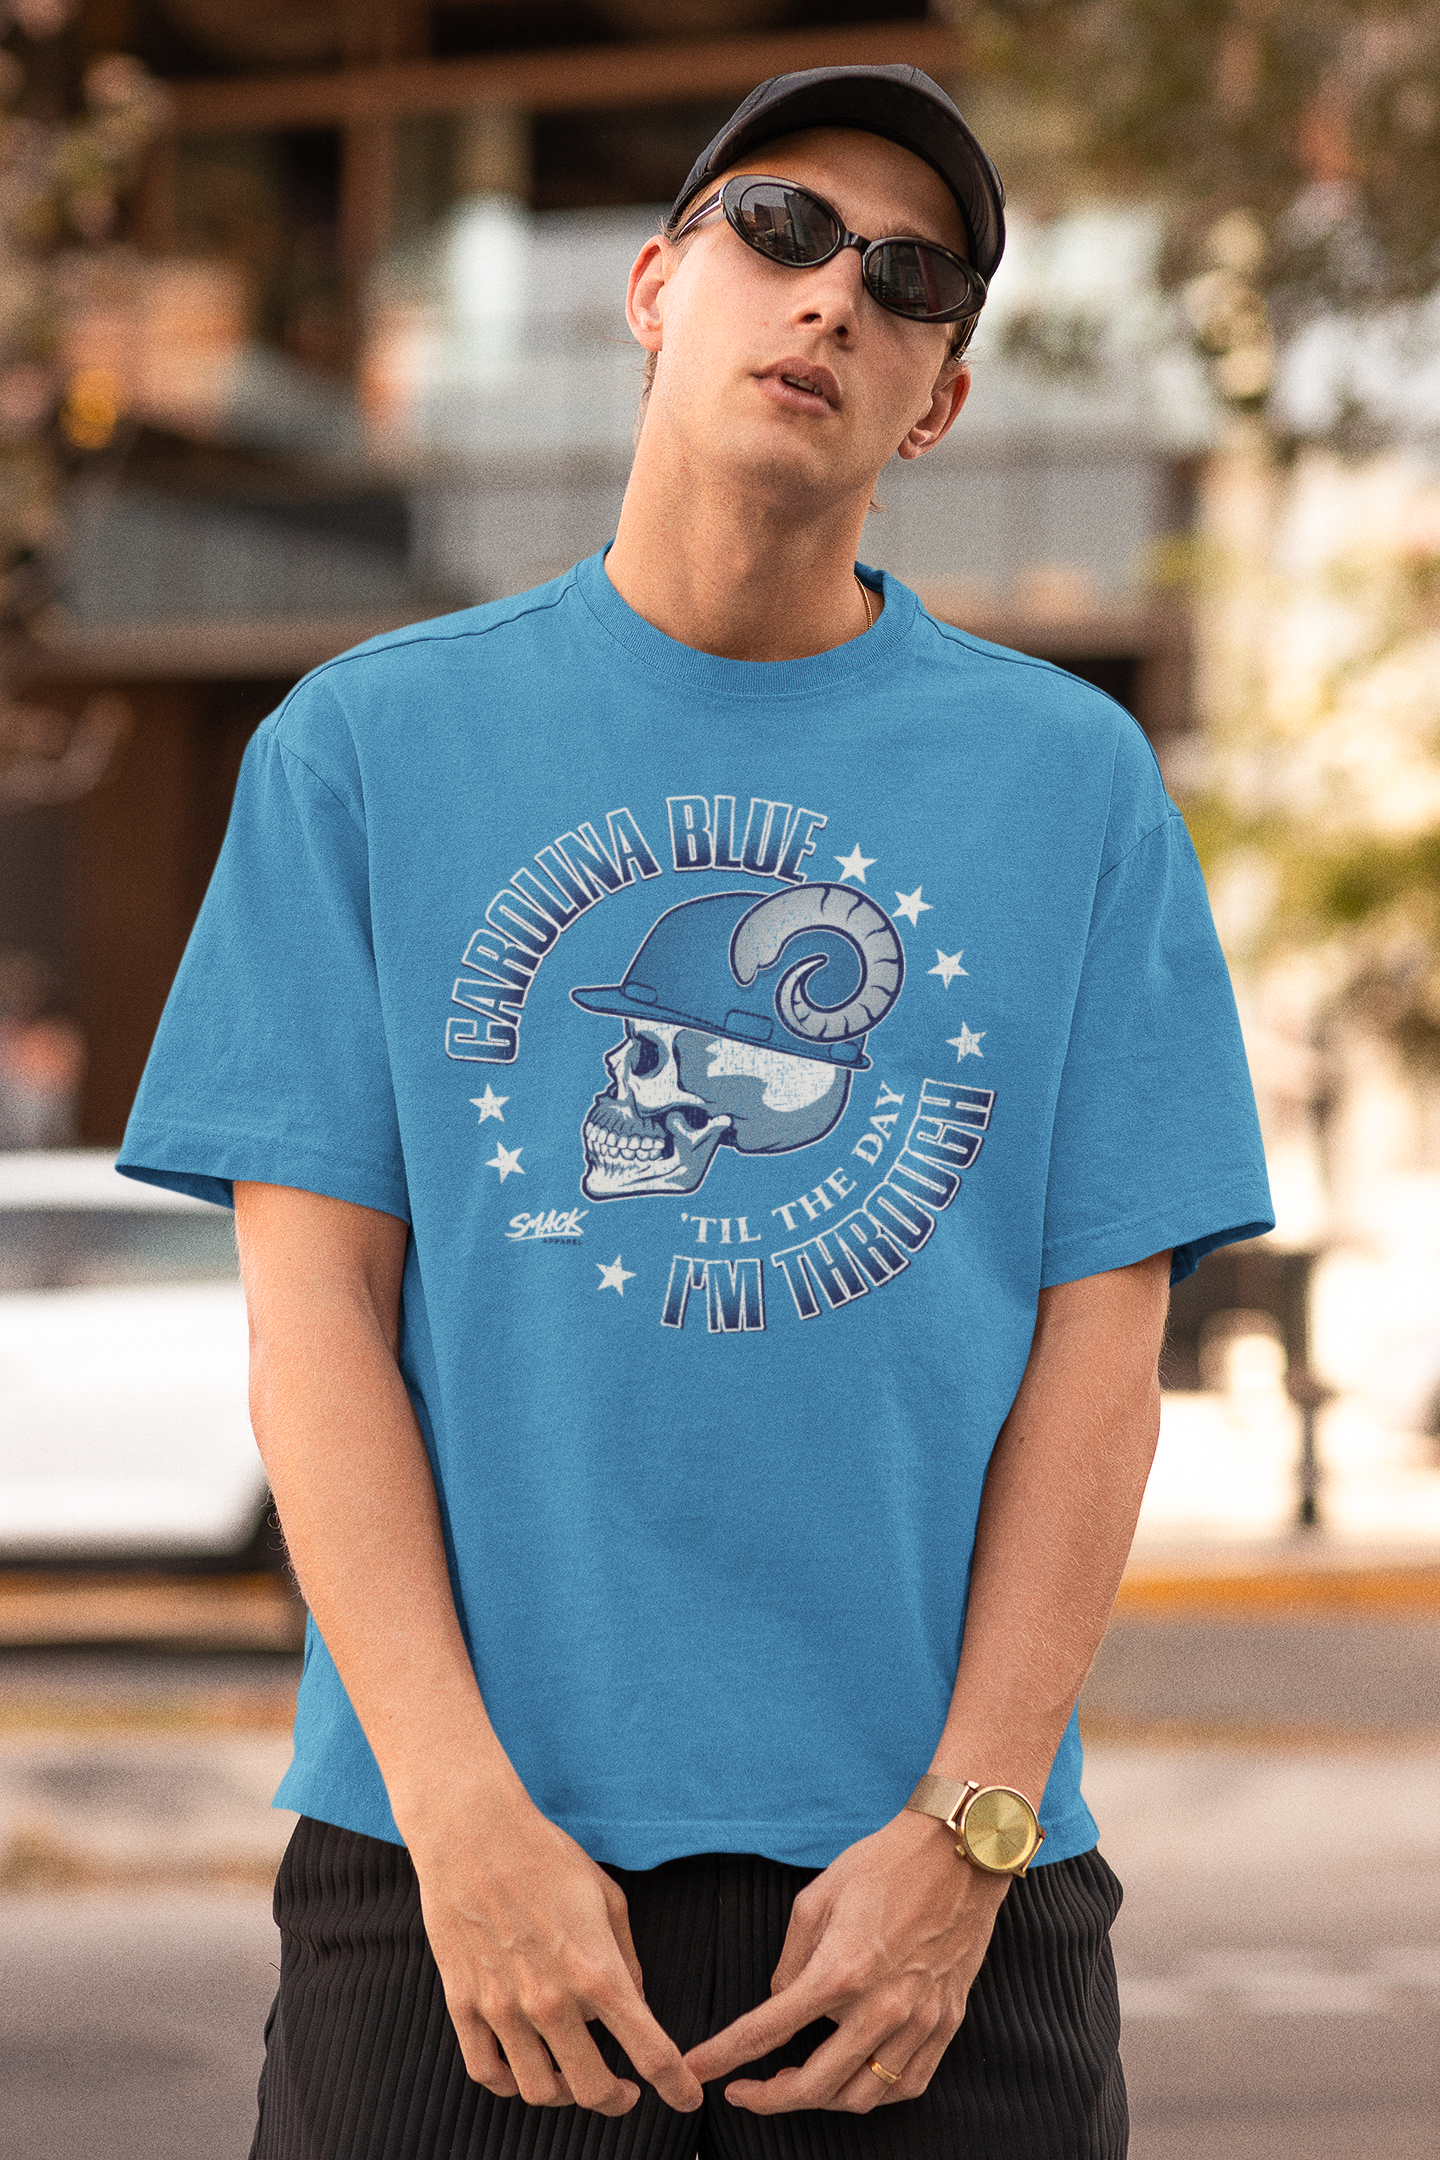 Carolina Blue HTV - T-Shirts and/ or Garments - USCutter Forum